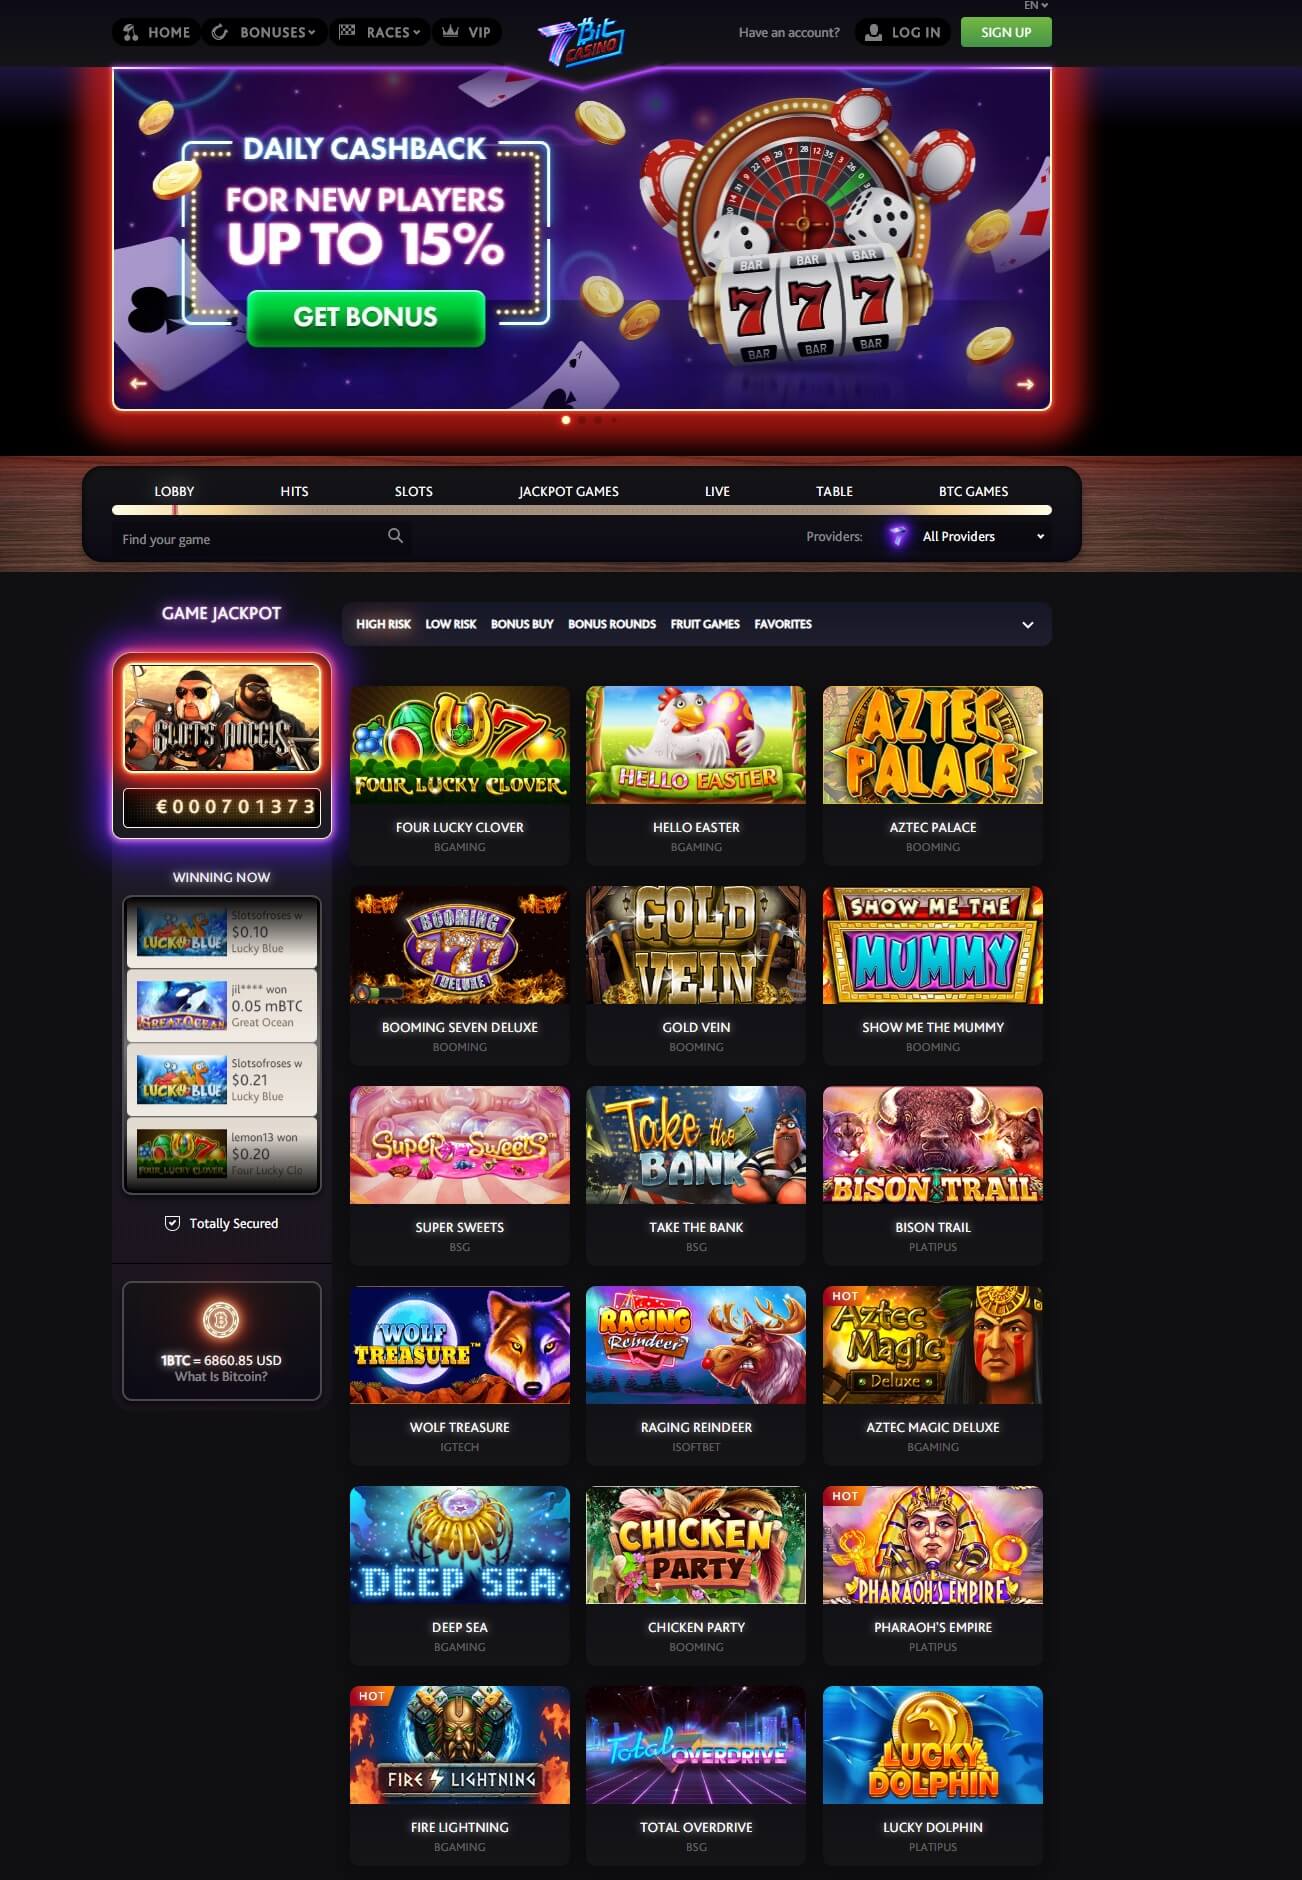 7bit casino live chat